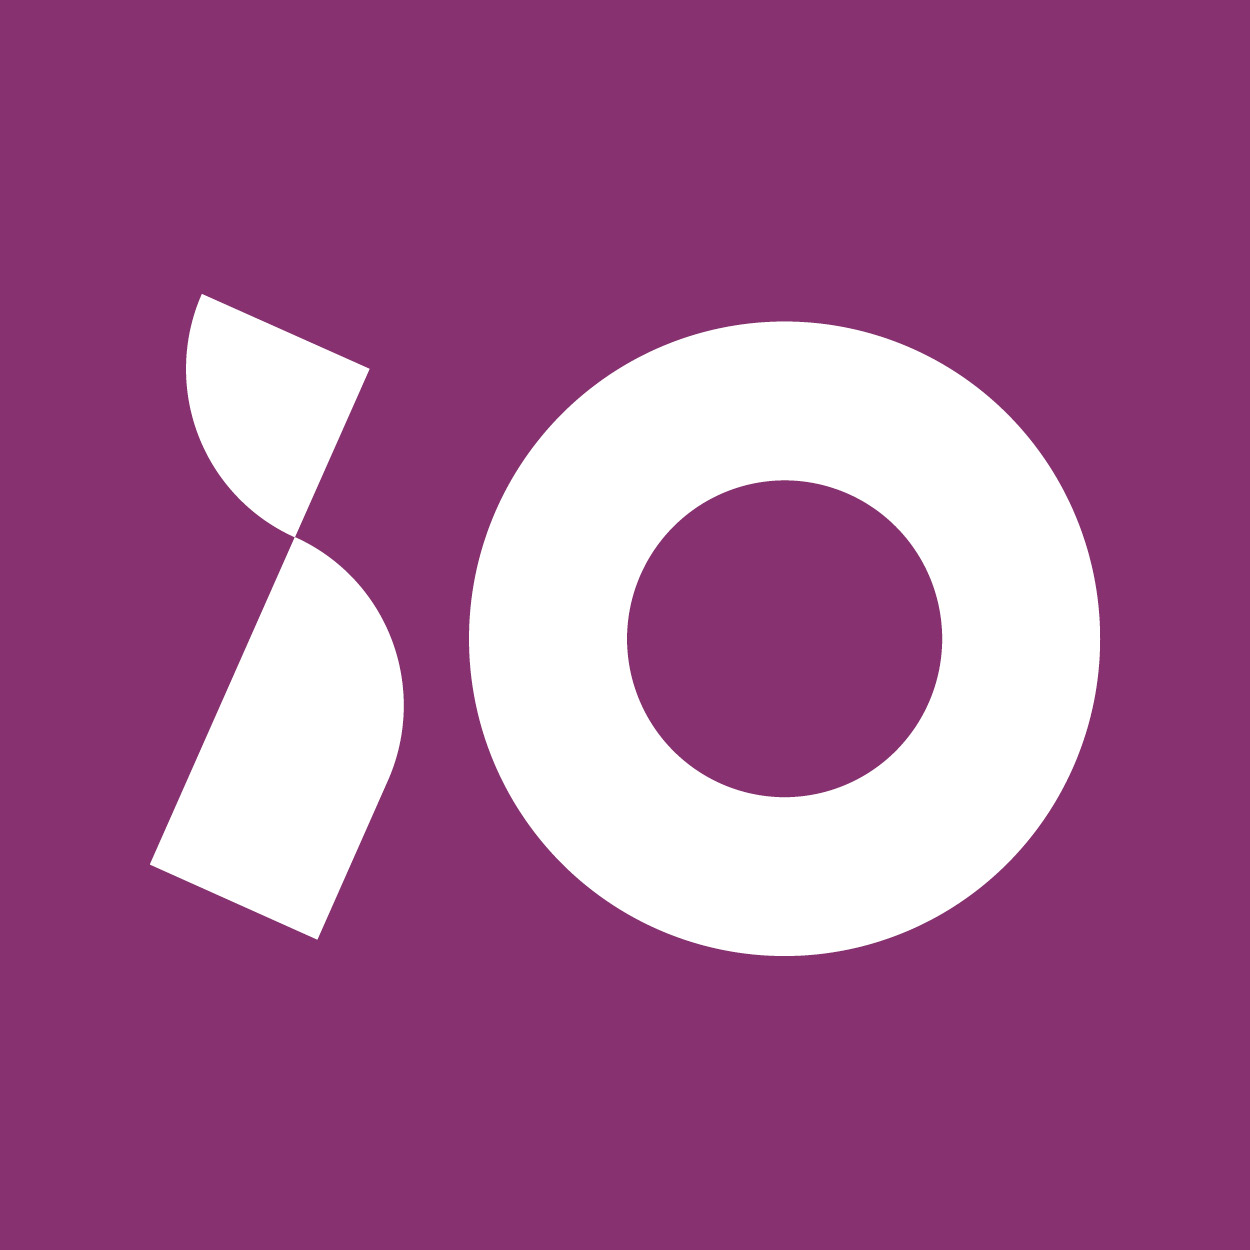 iO logo color purple